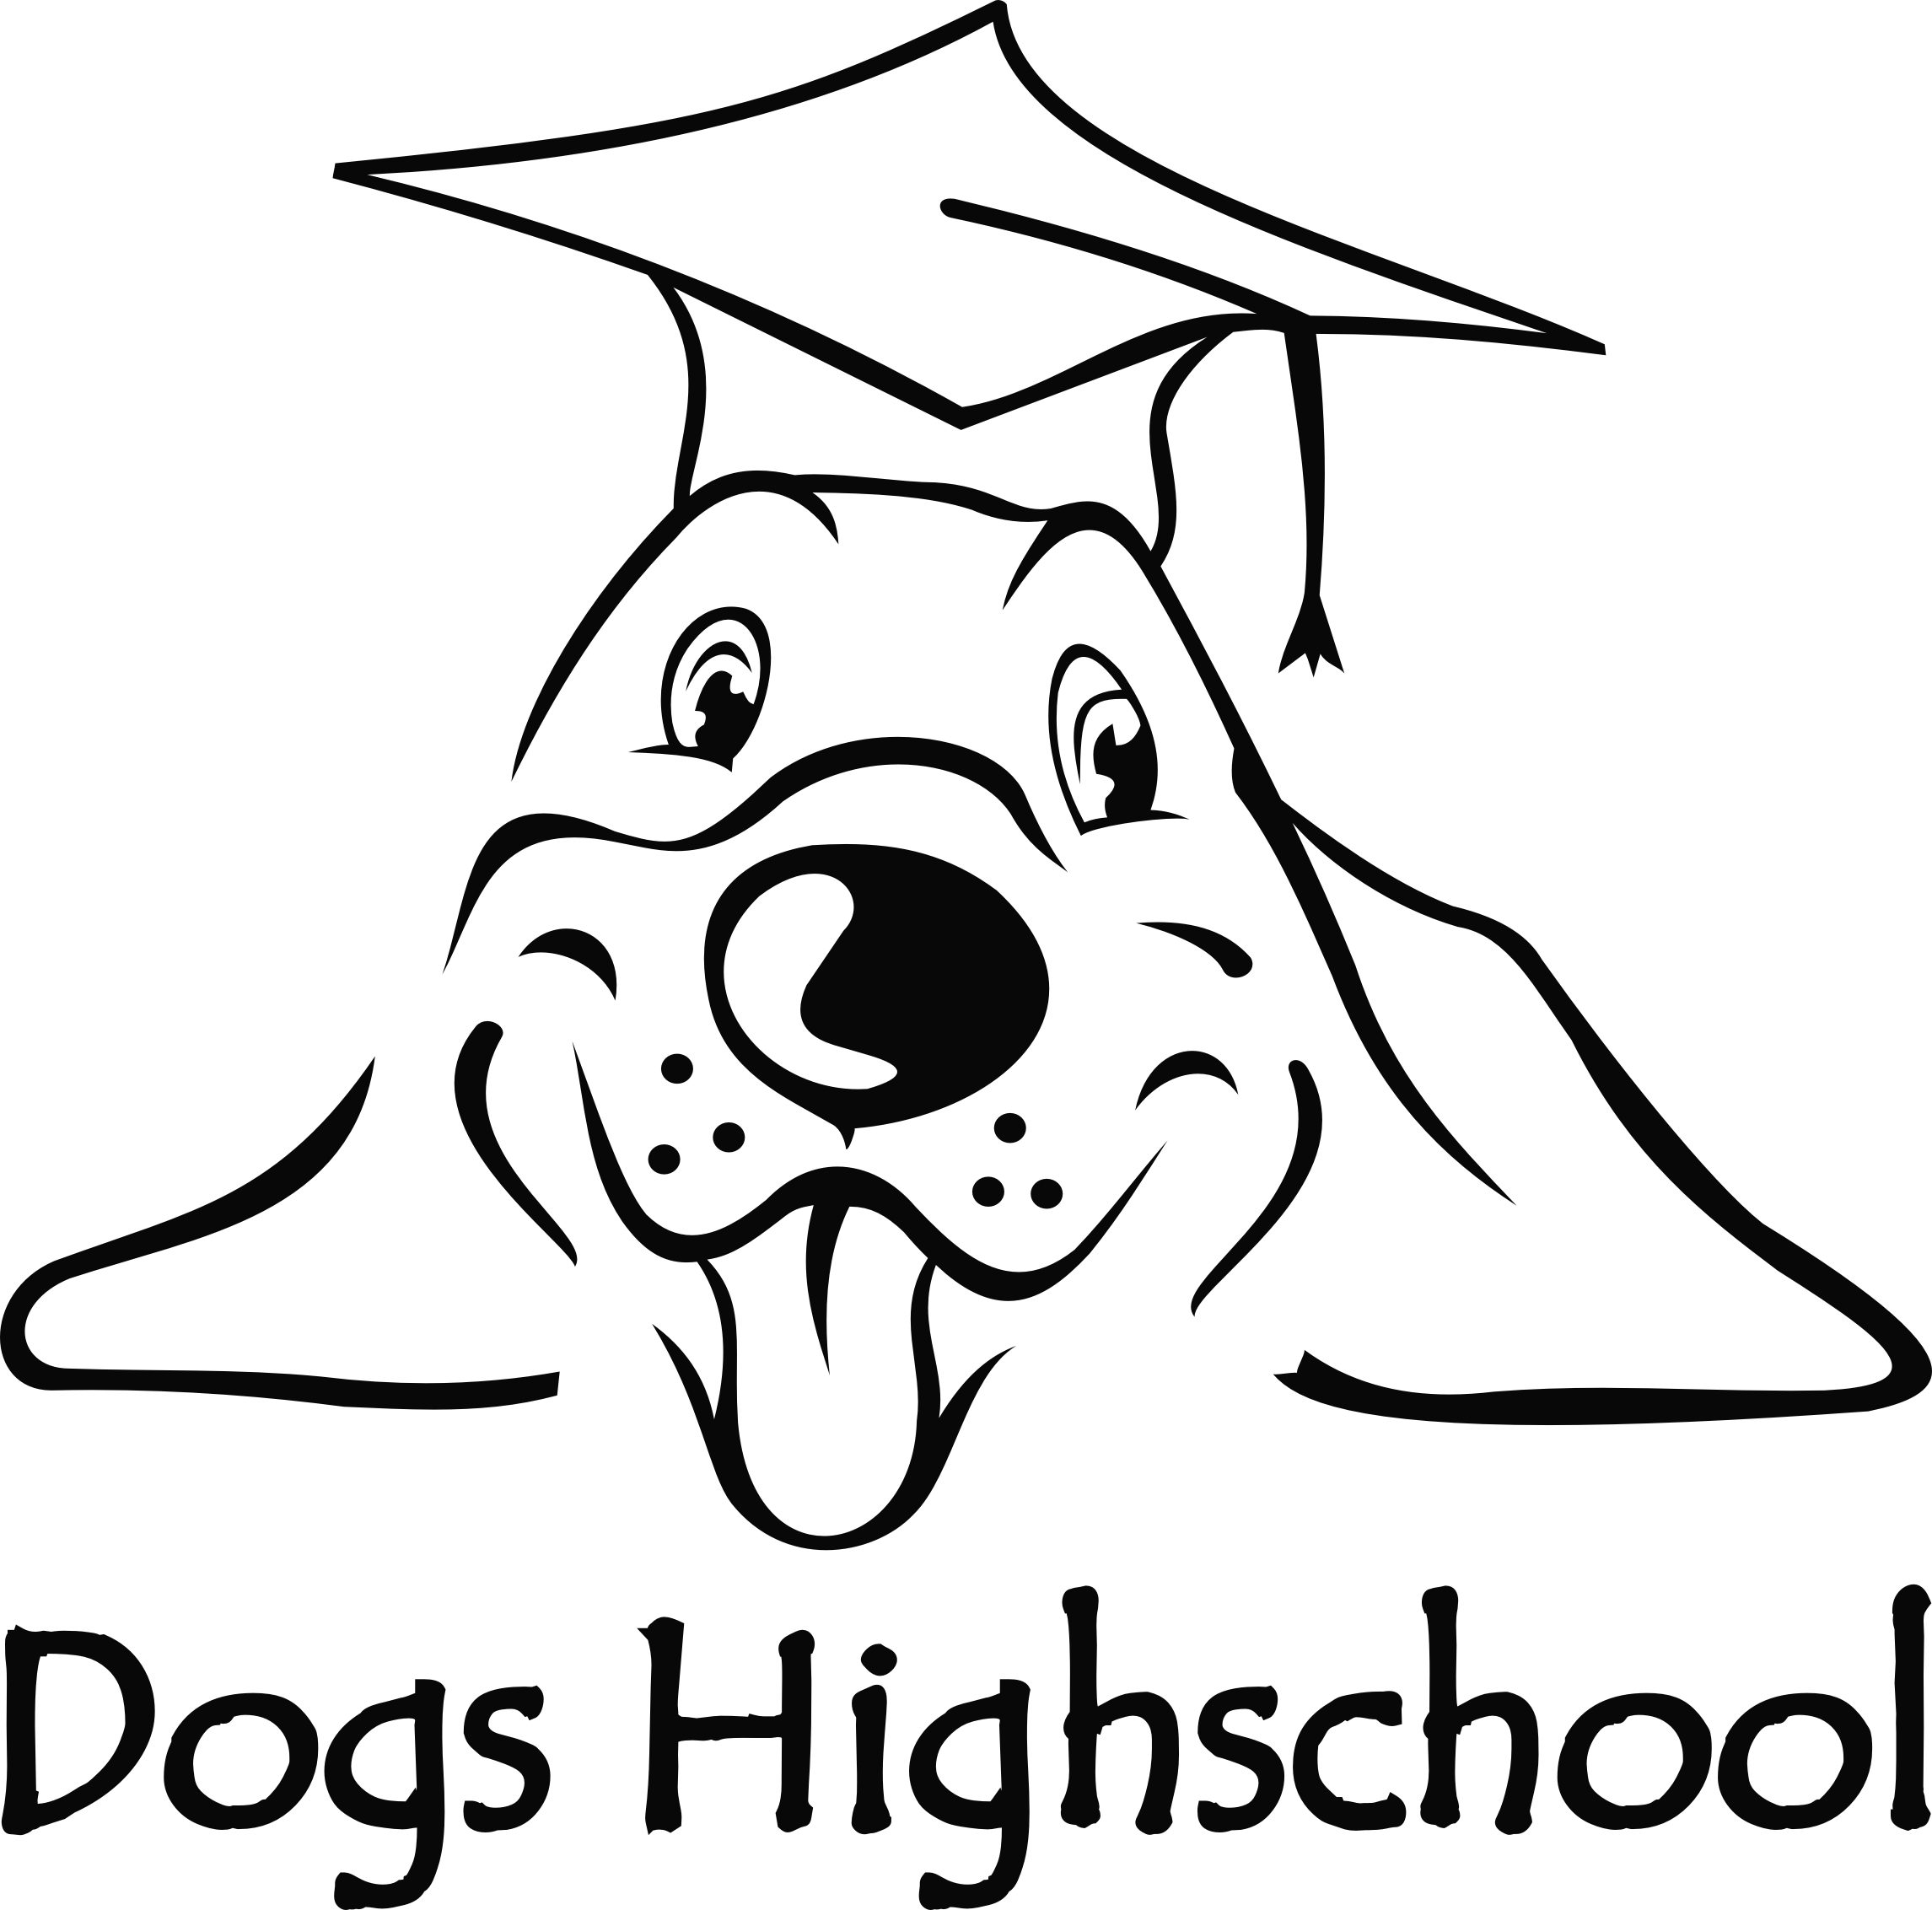 Dogshighschool